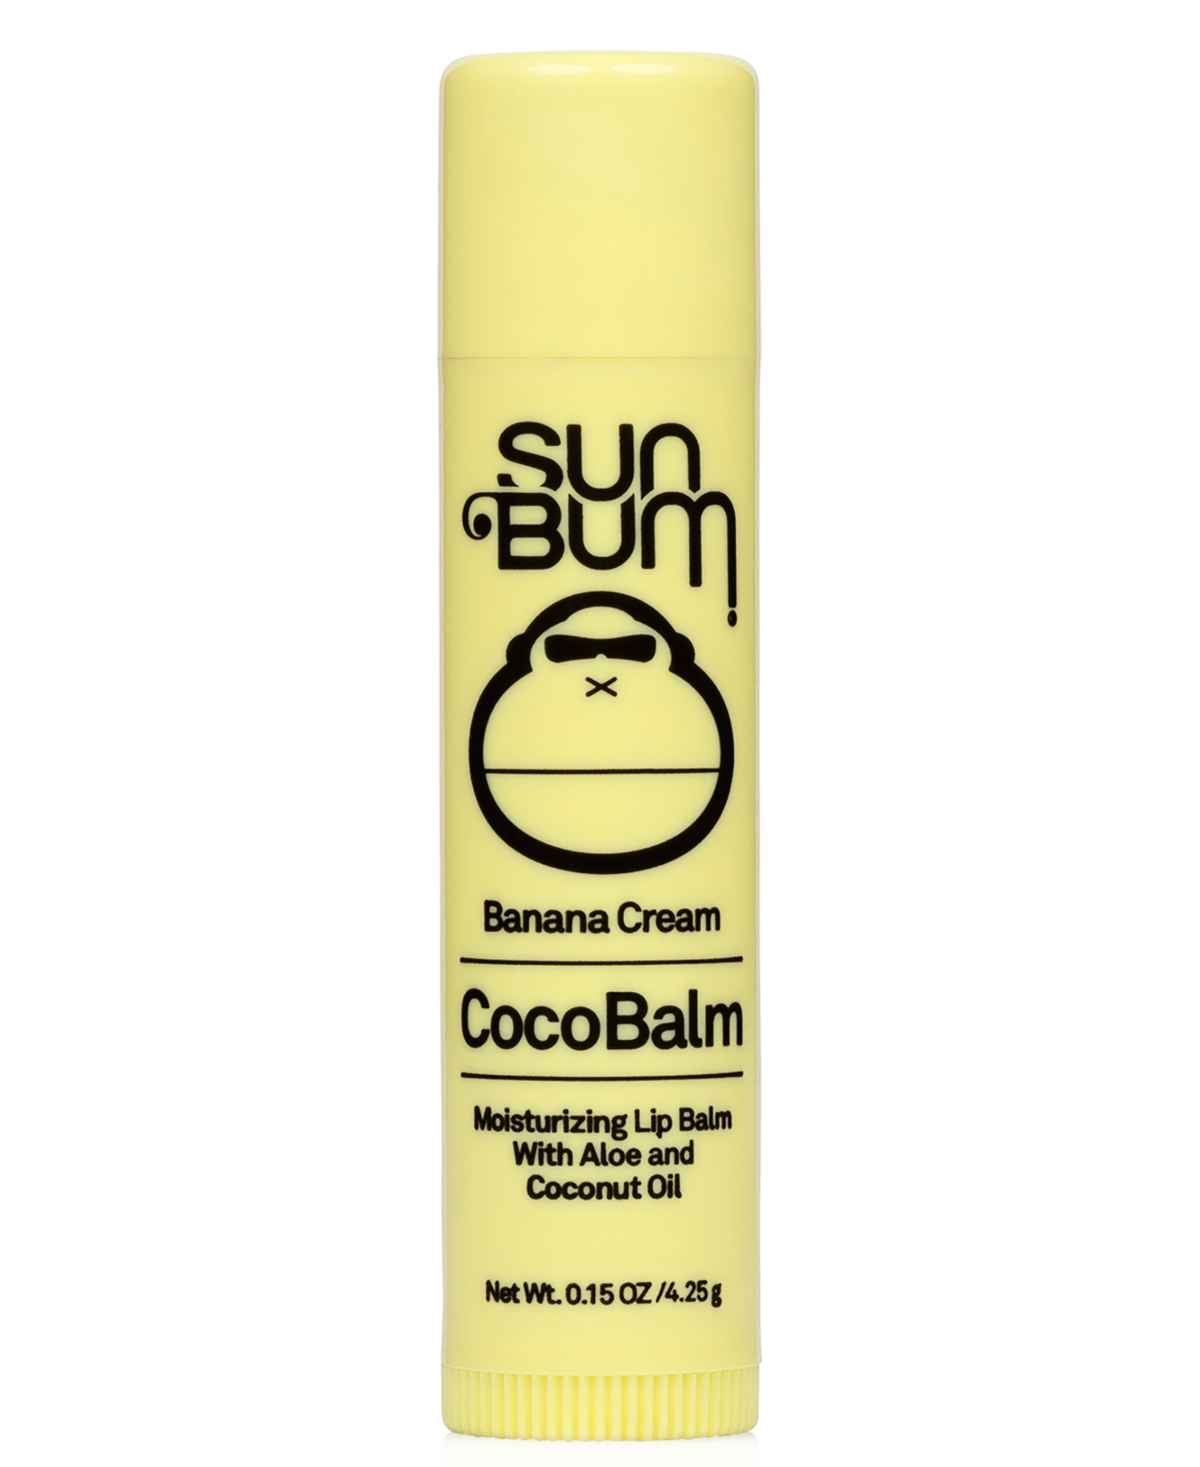 Coco Balm Moisturizing Lip Balm, 0.15 oz. - Banana Cream